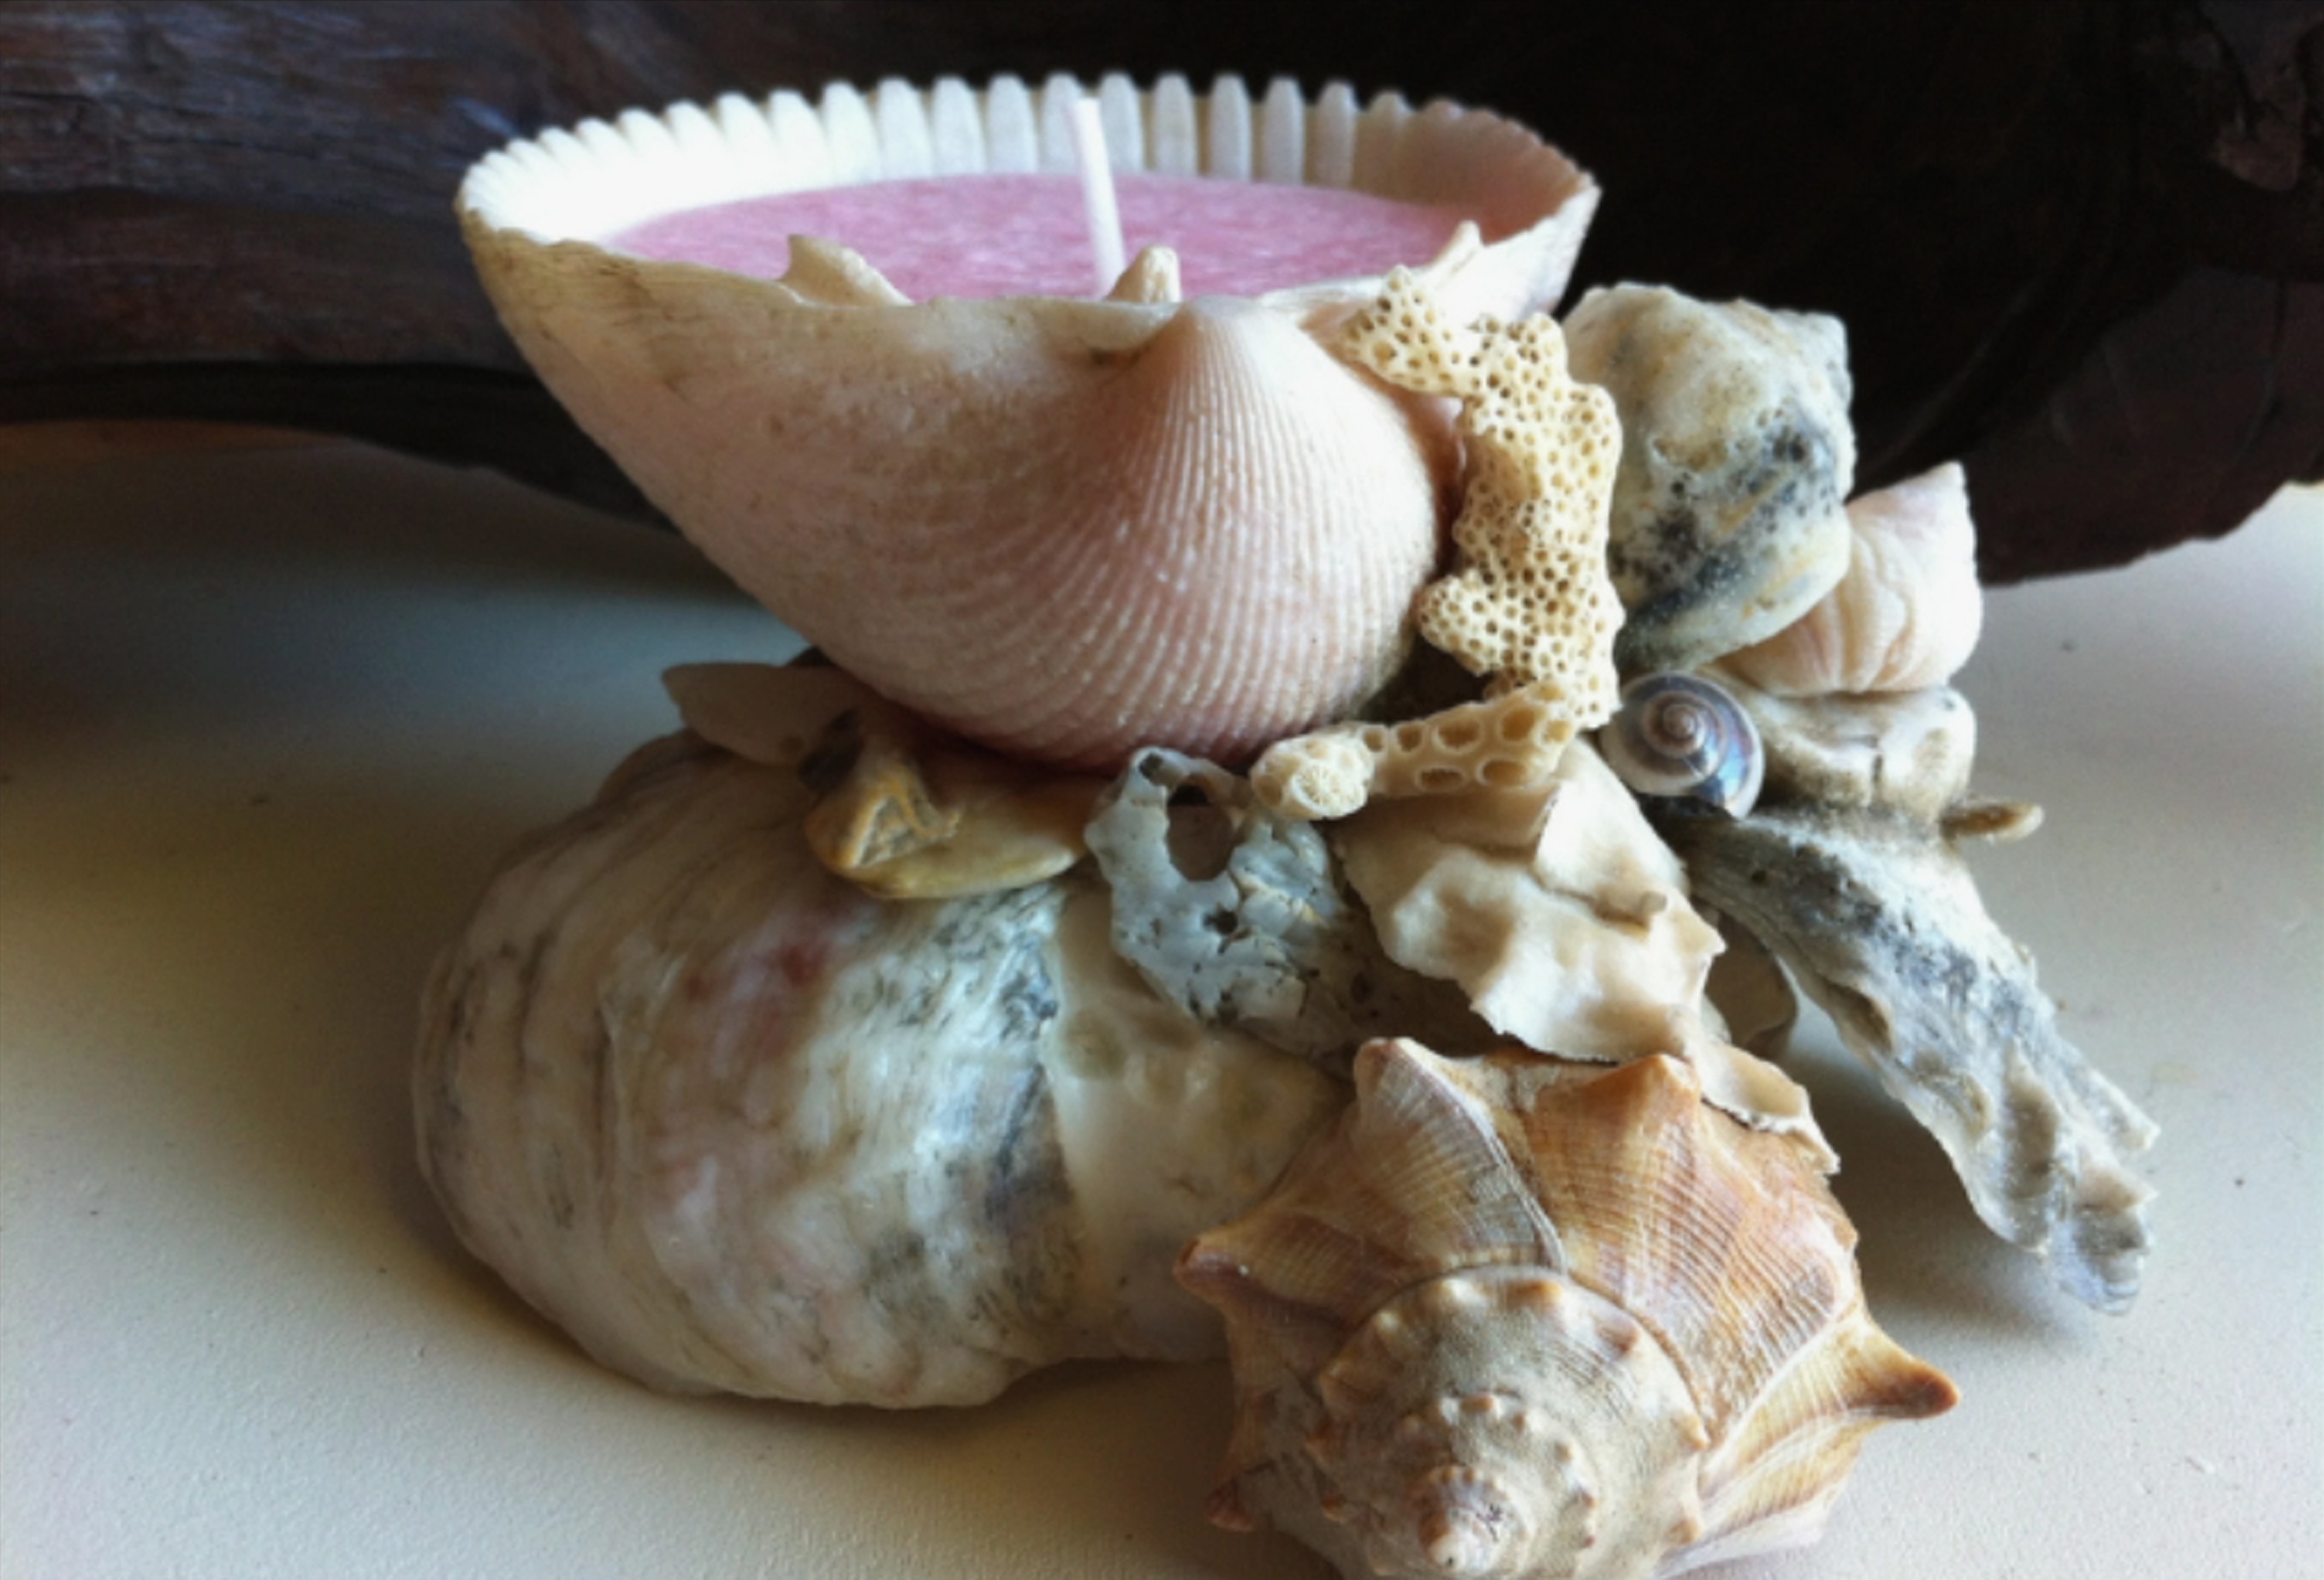 The candle-making process using seashells